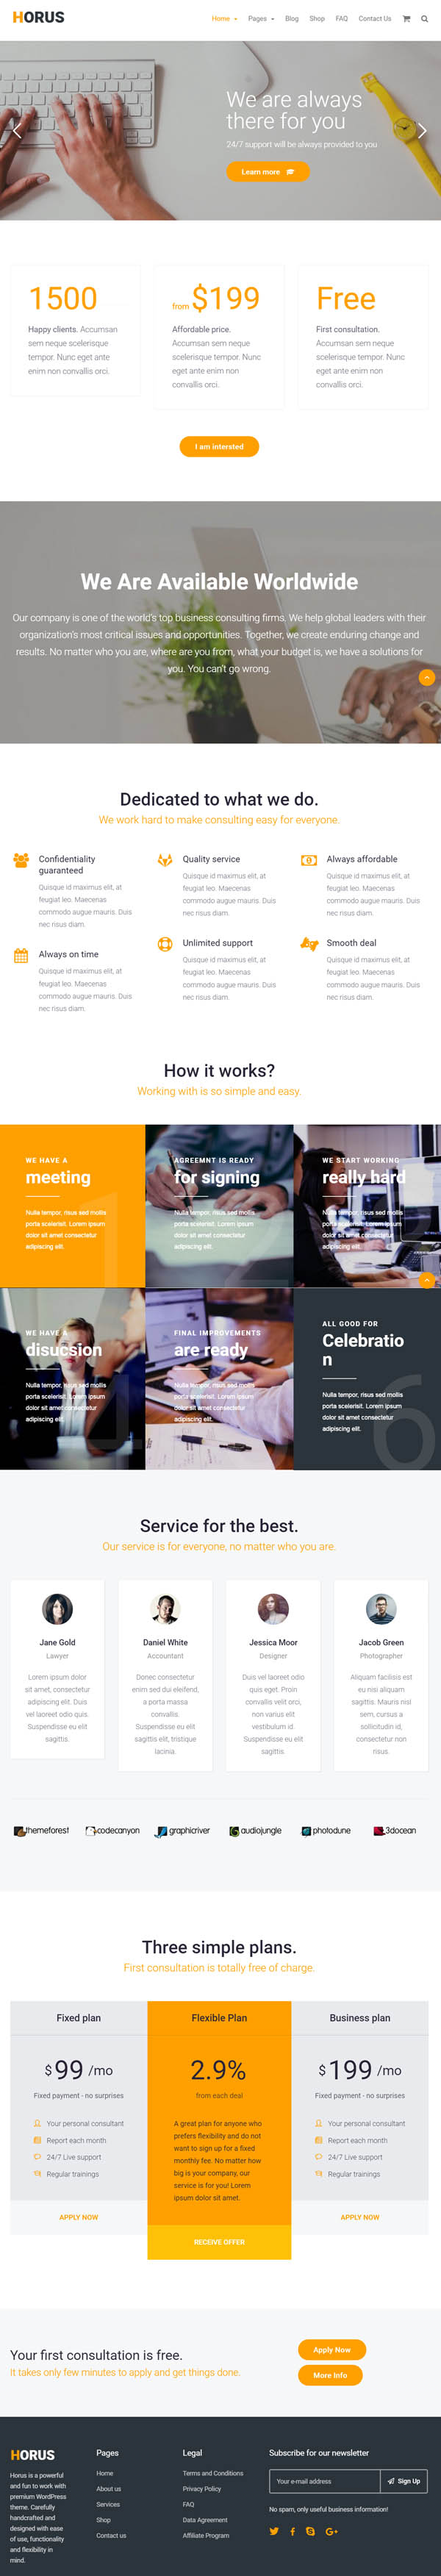 Horus - Multipurpose Business Agency Startup WordPress Theme